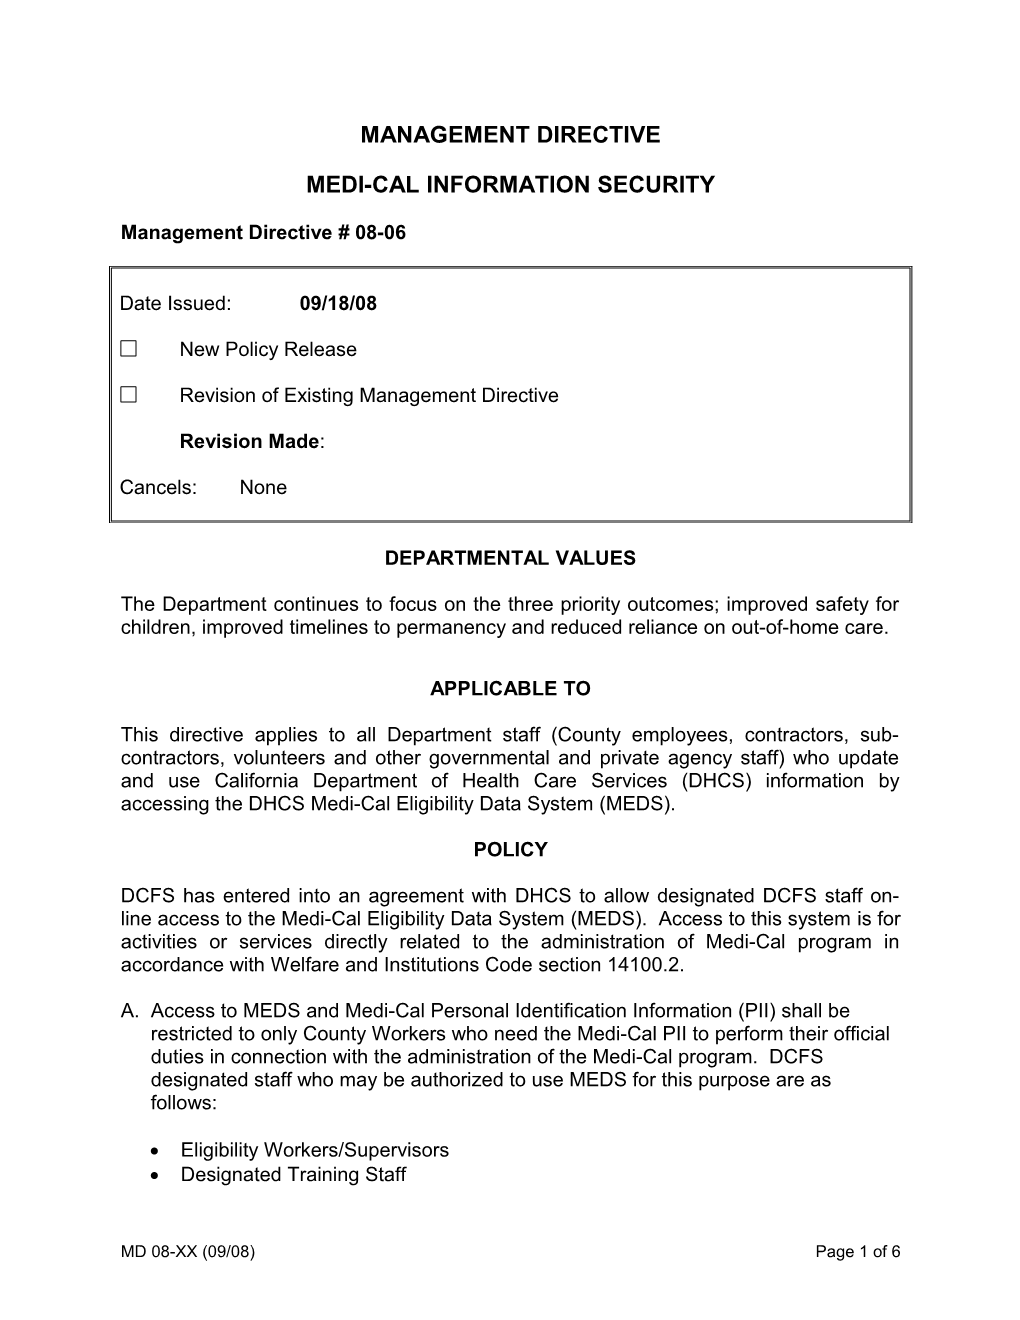 MD 08-06, Medi-Cal Information Security